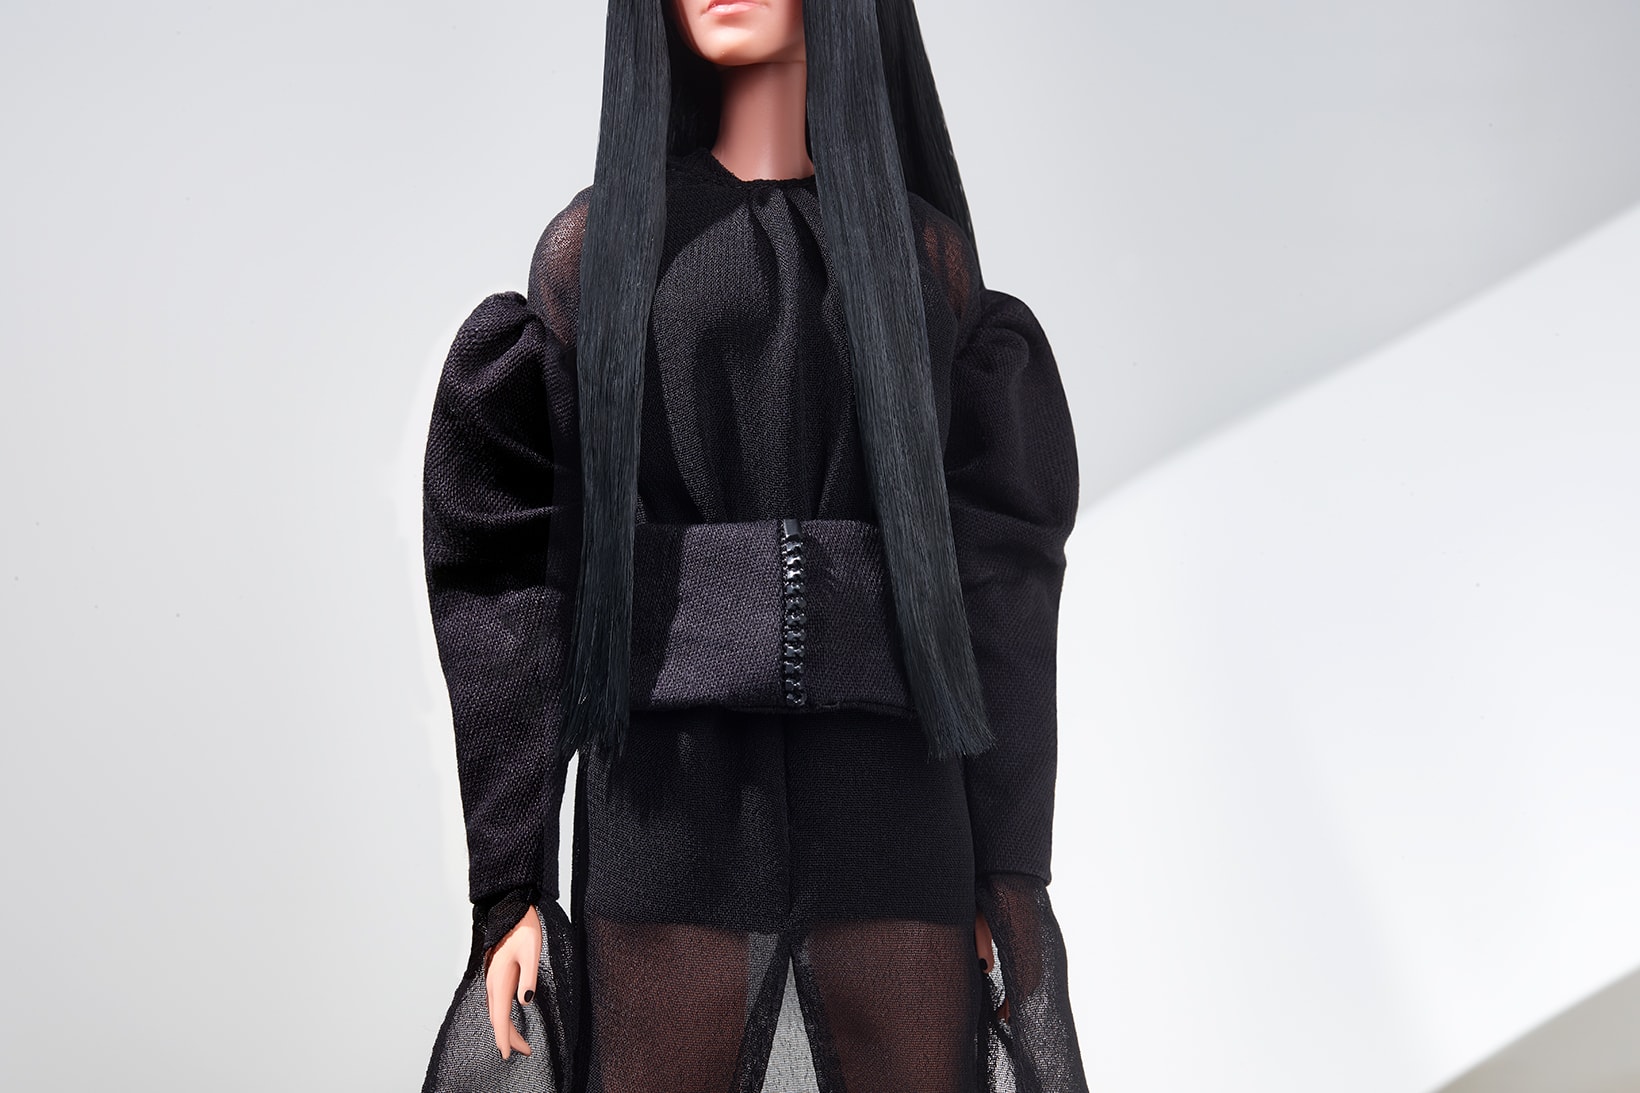 Barbie Doll Vera Wang Tribute Collection Fashion Designer Collaboration